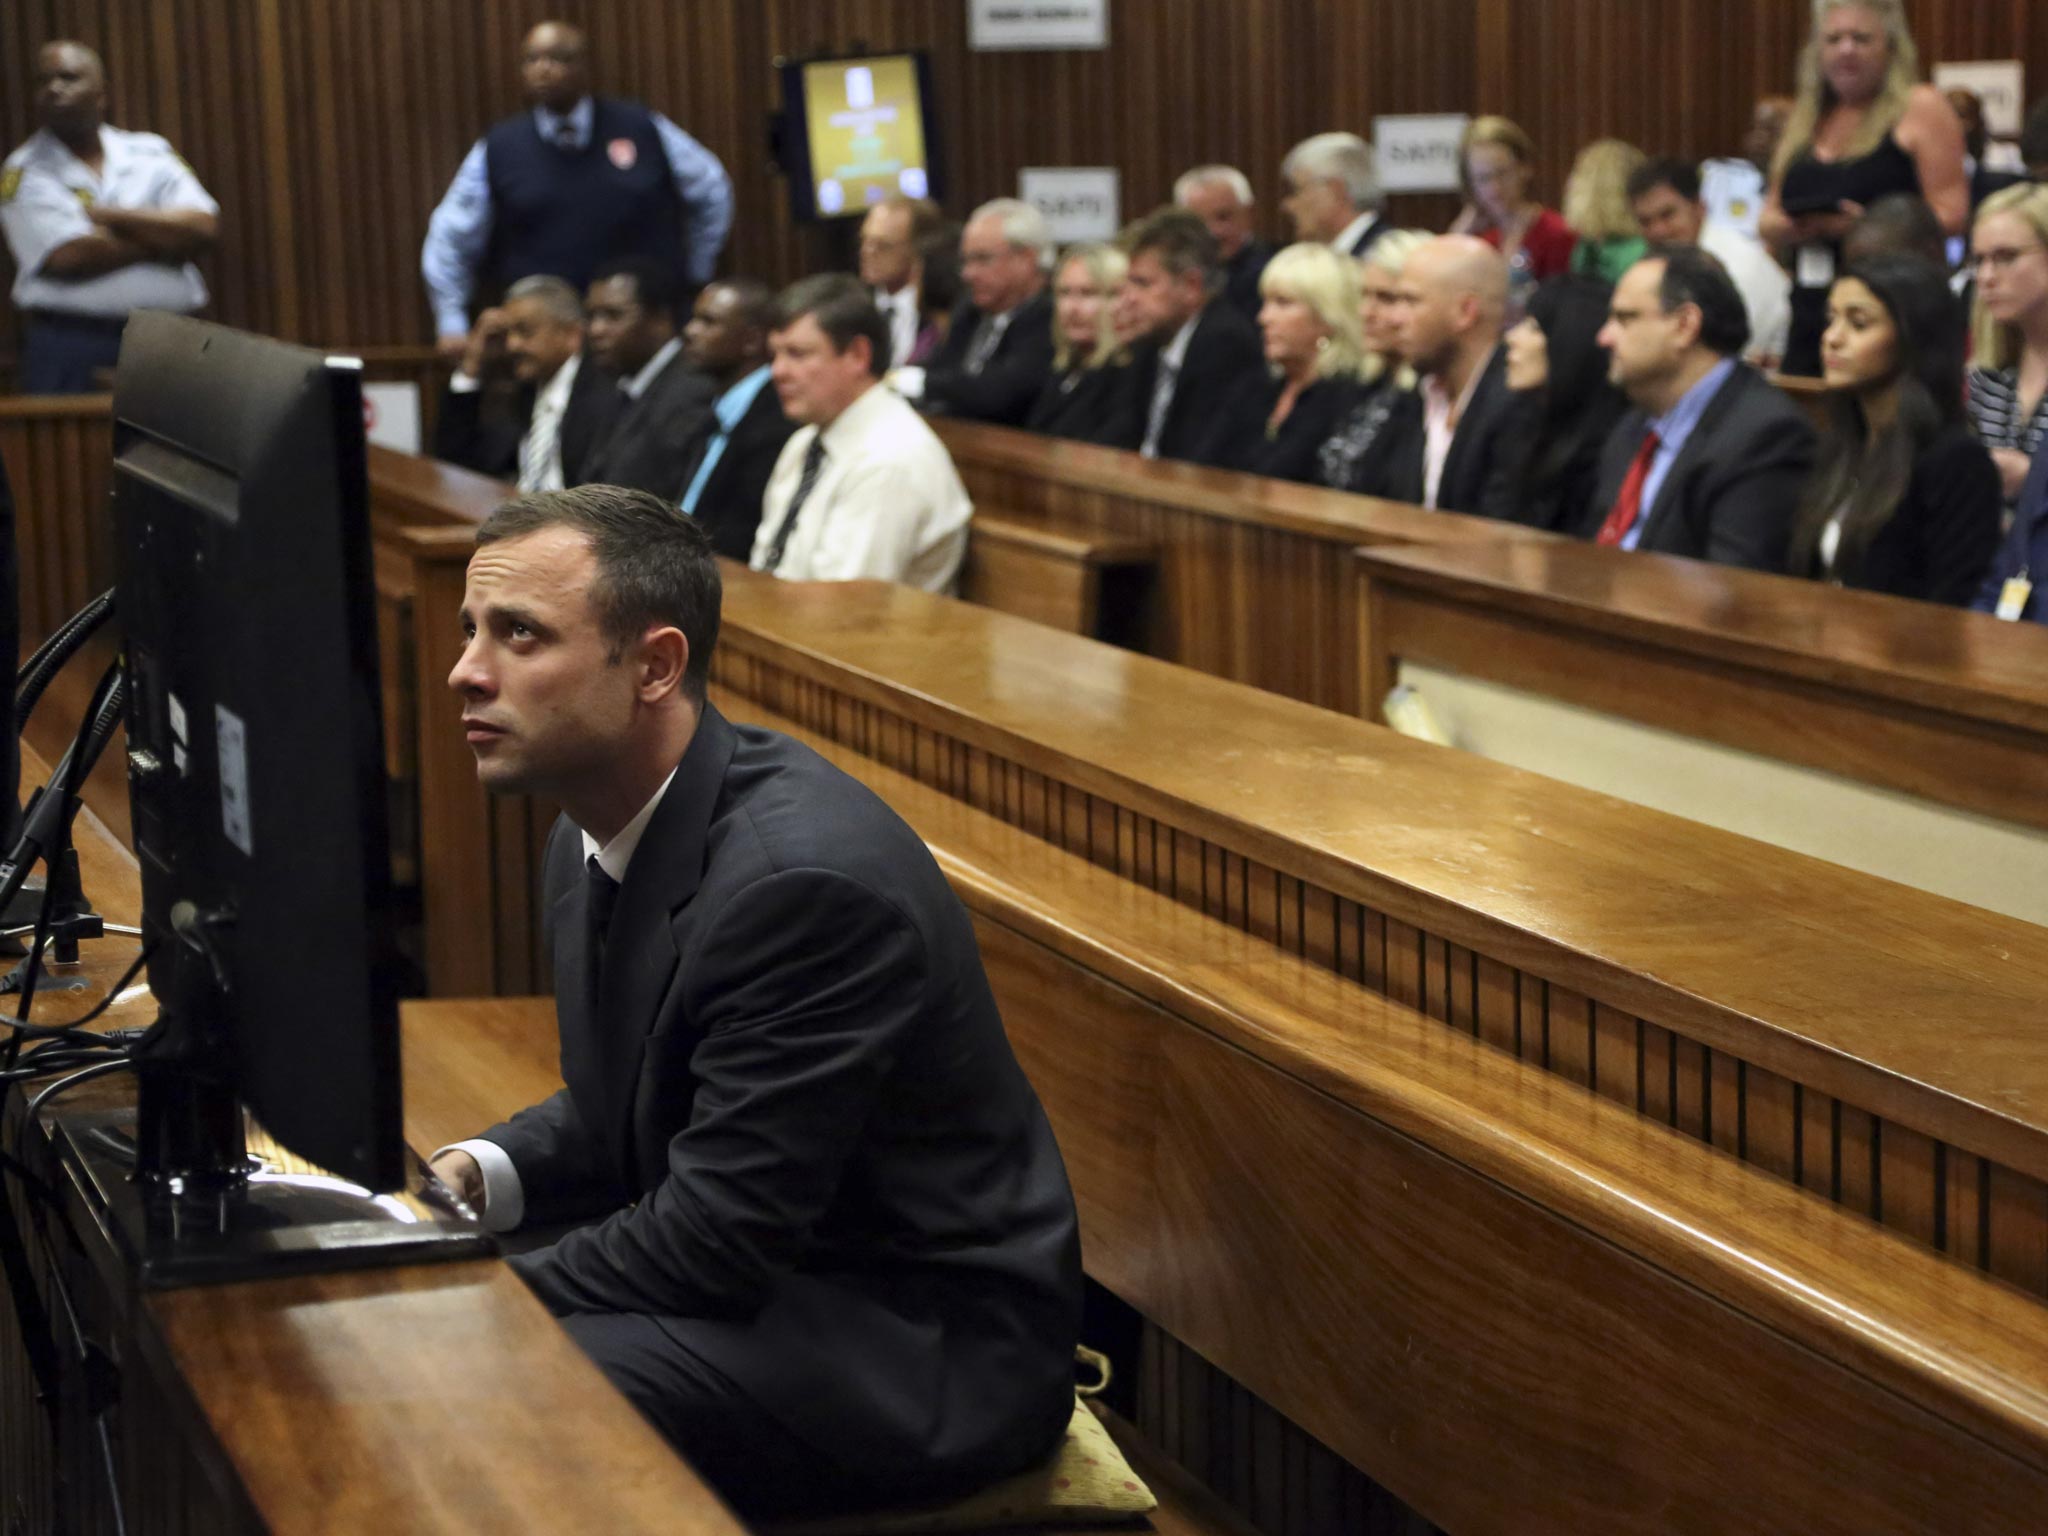 Oscar Pistorius at the Pretoria High Court in Pretoria, South Africa